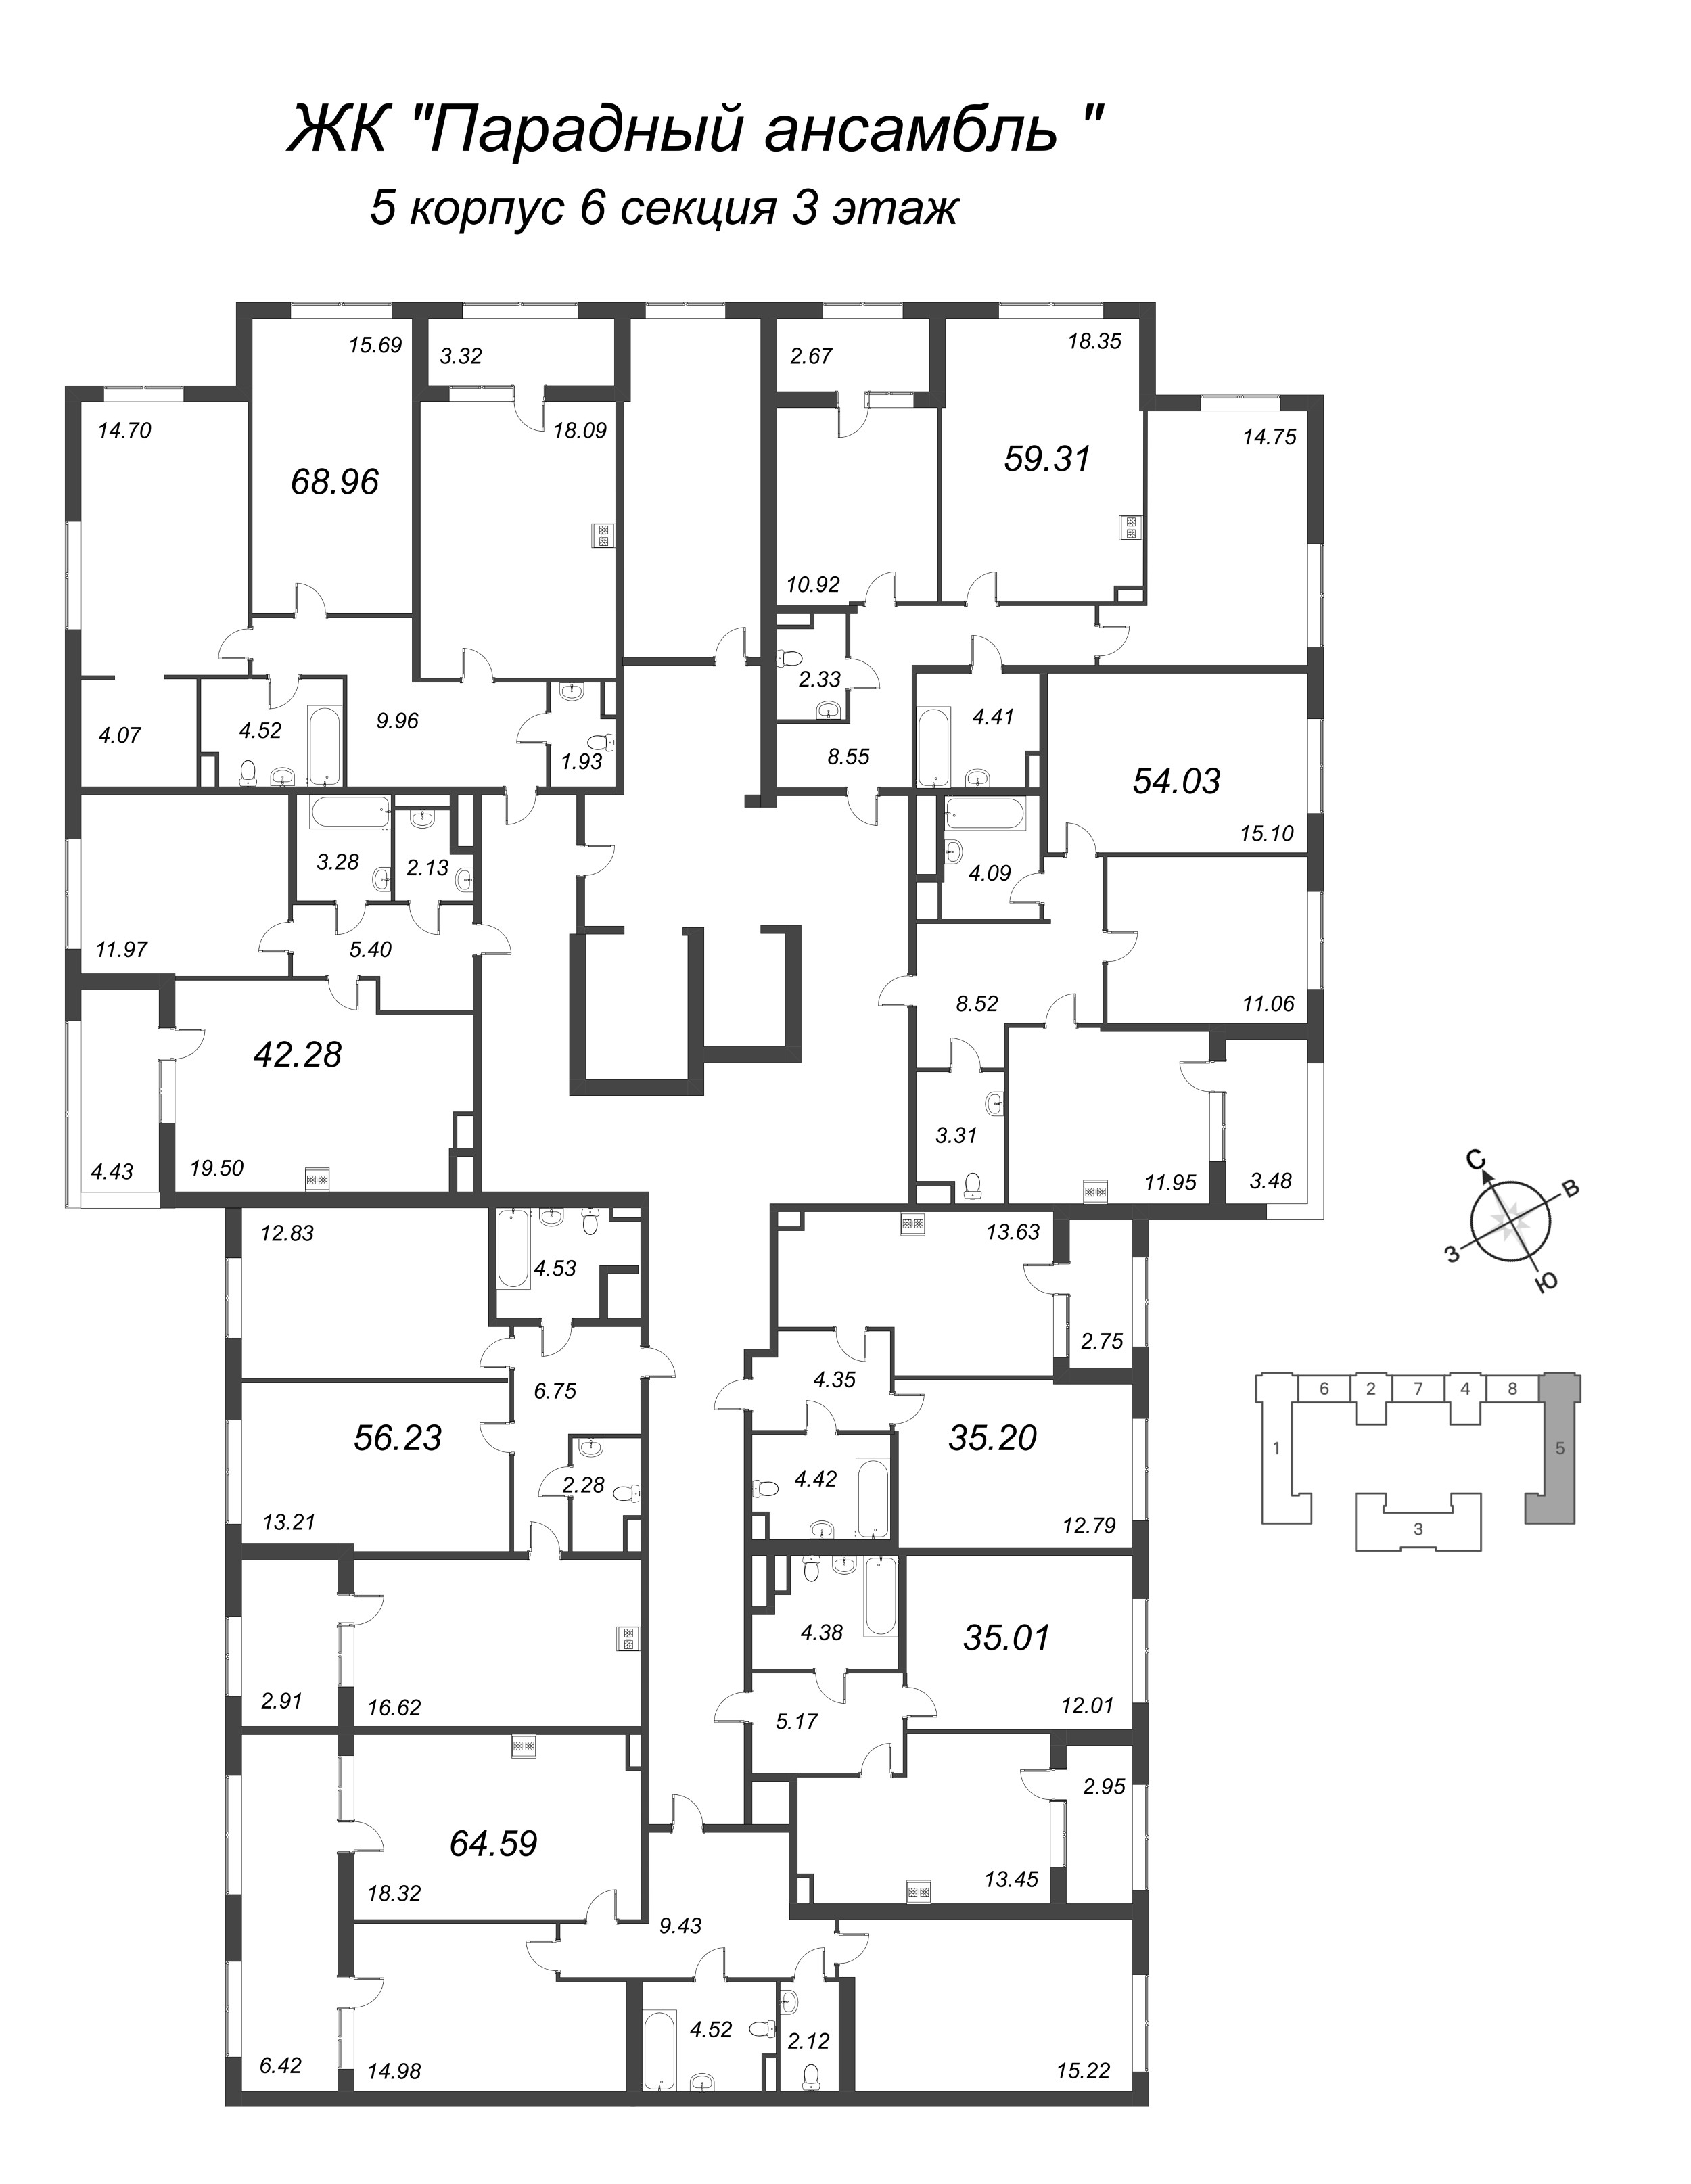 3-комнатная (Евро) квартира, 56.23 м² - планировка этажа